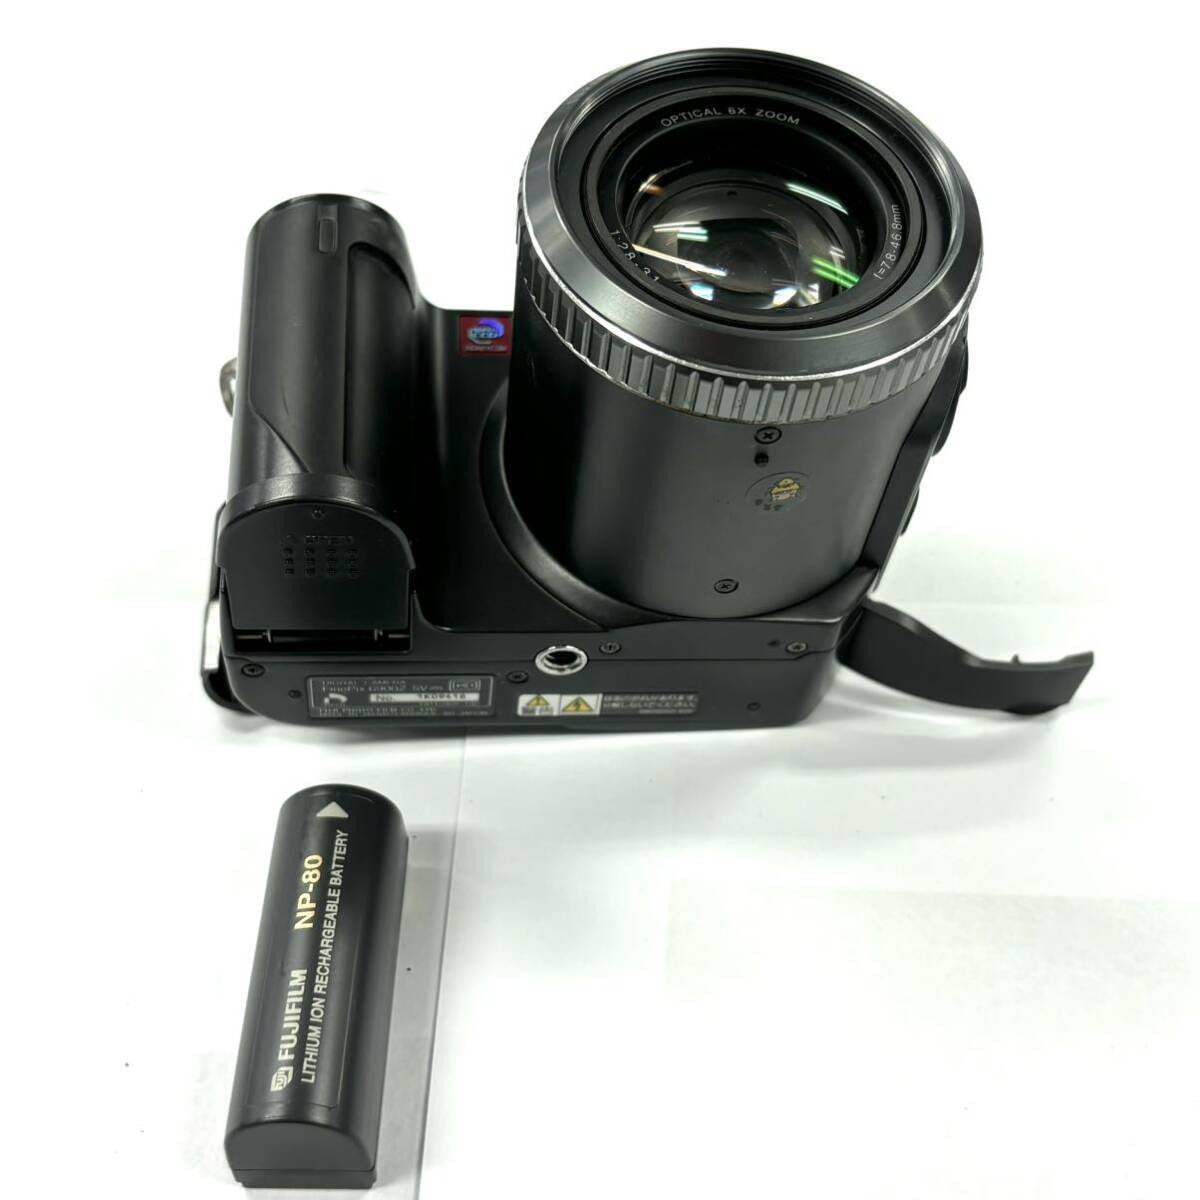 H2877 デジタルカメラ FUJIFILM FinePix 6900Z 13.2× HONEYCOM ZOOM SUPER-EBC FUJINON LENS OPTICAL 1:2.8-3.1 f＝7.8-46.8mm 中古の画像8